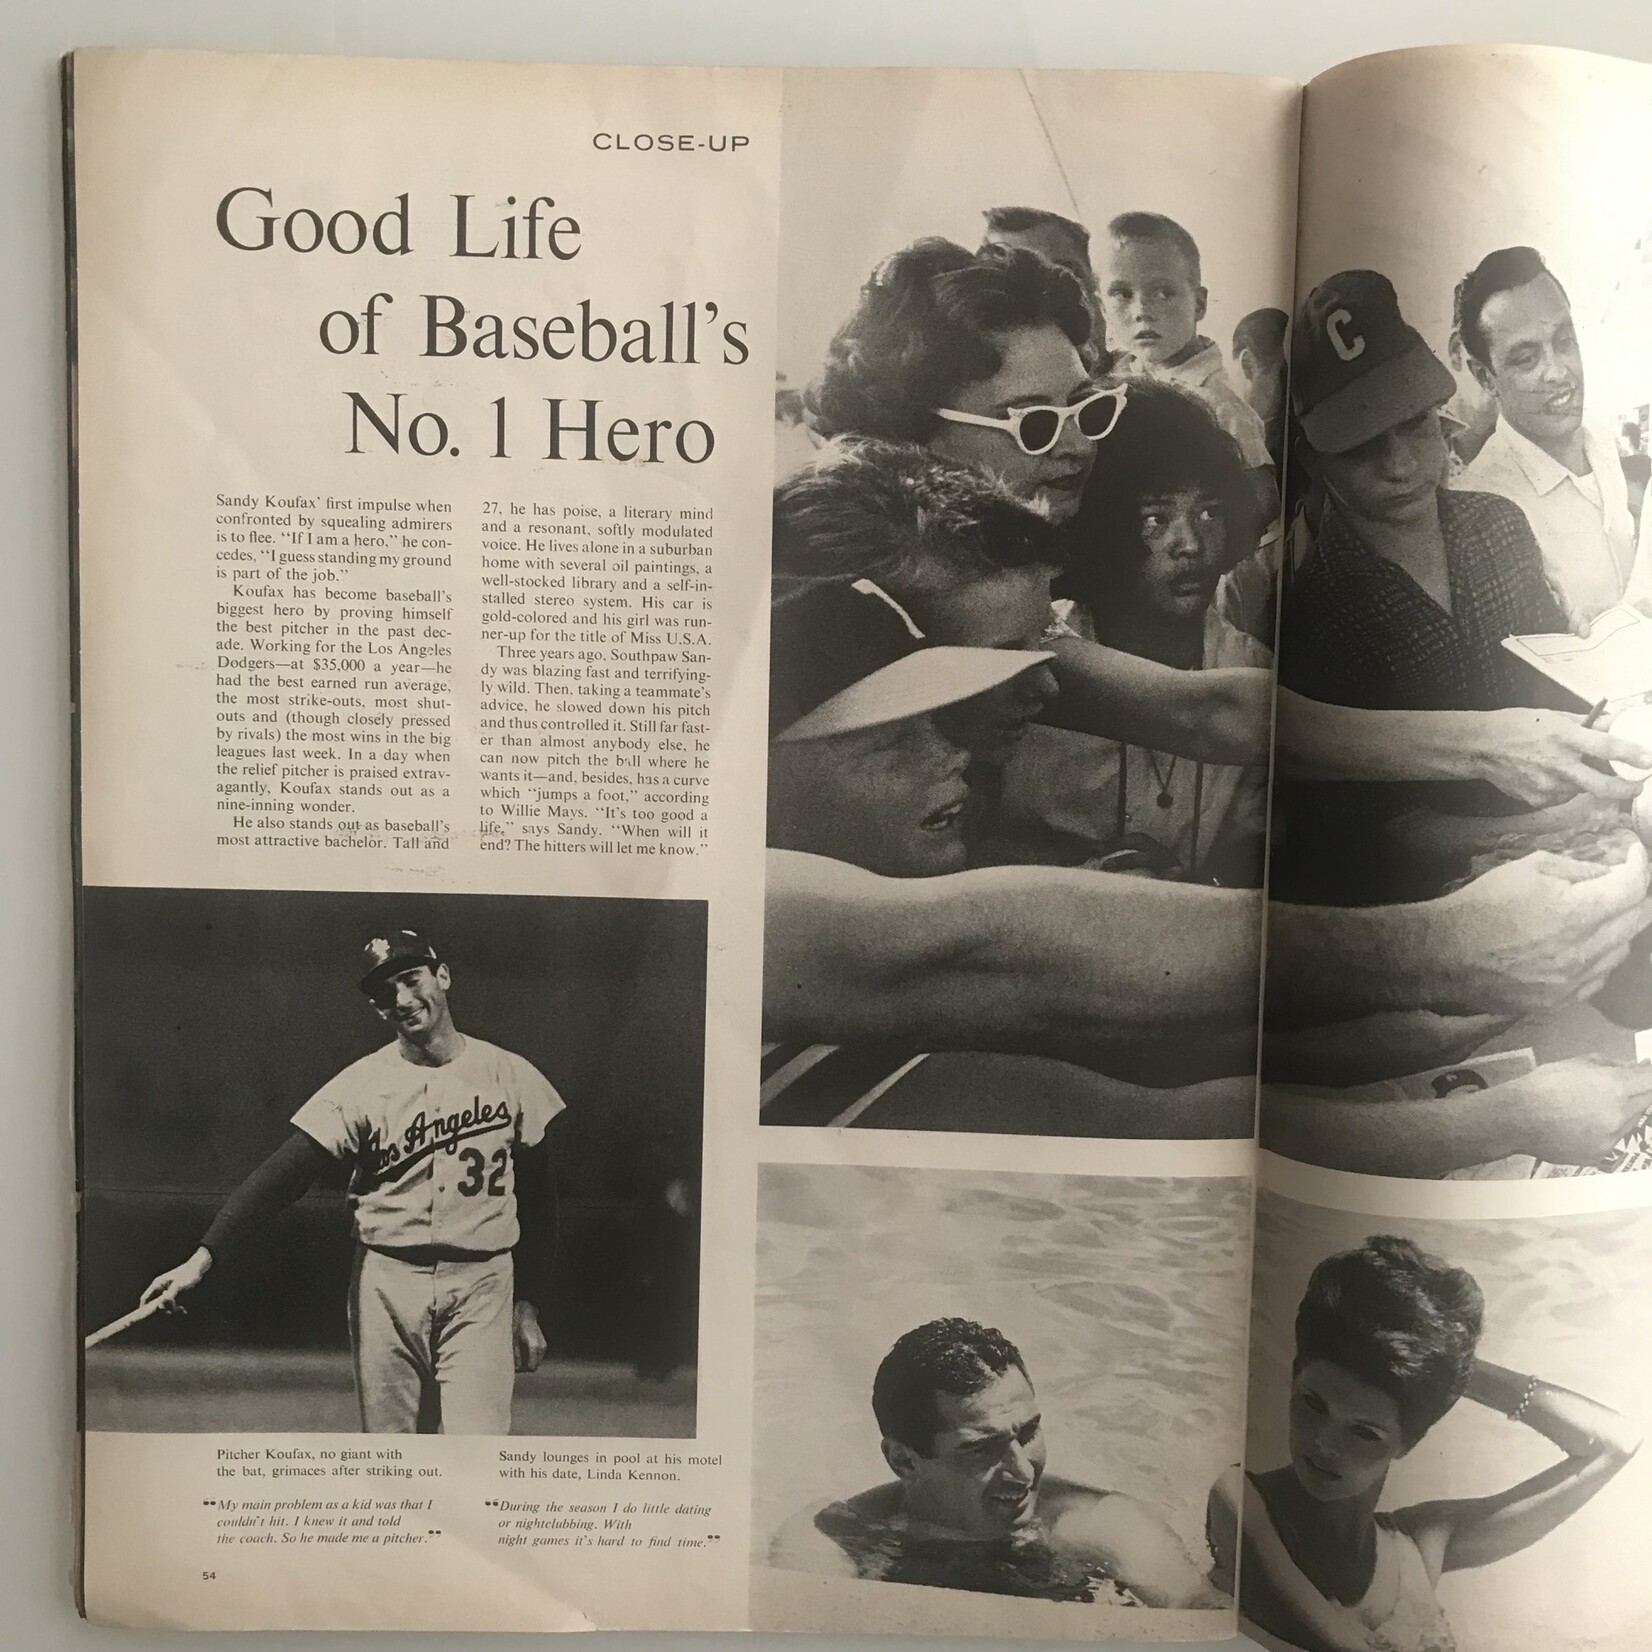 LIFE - 1963-08-02 - Sandy Koufax - Magazine (USED)